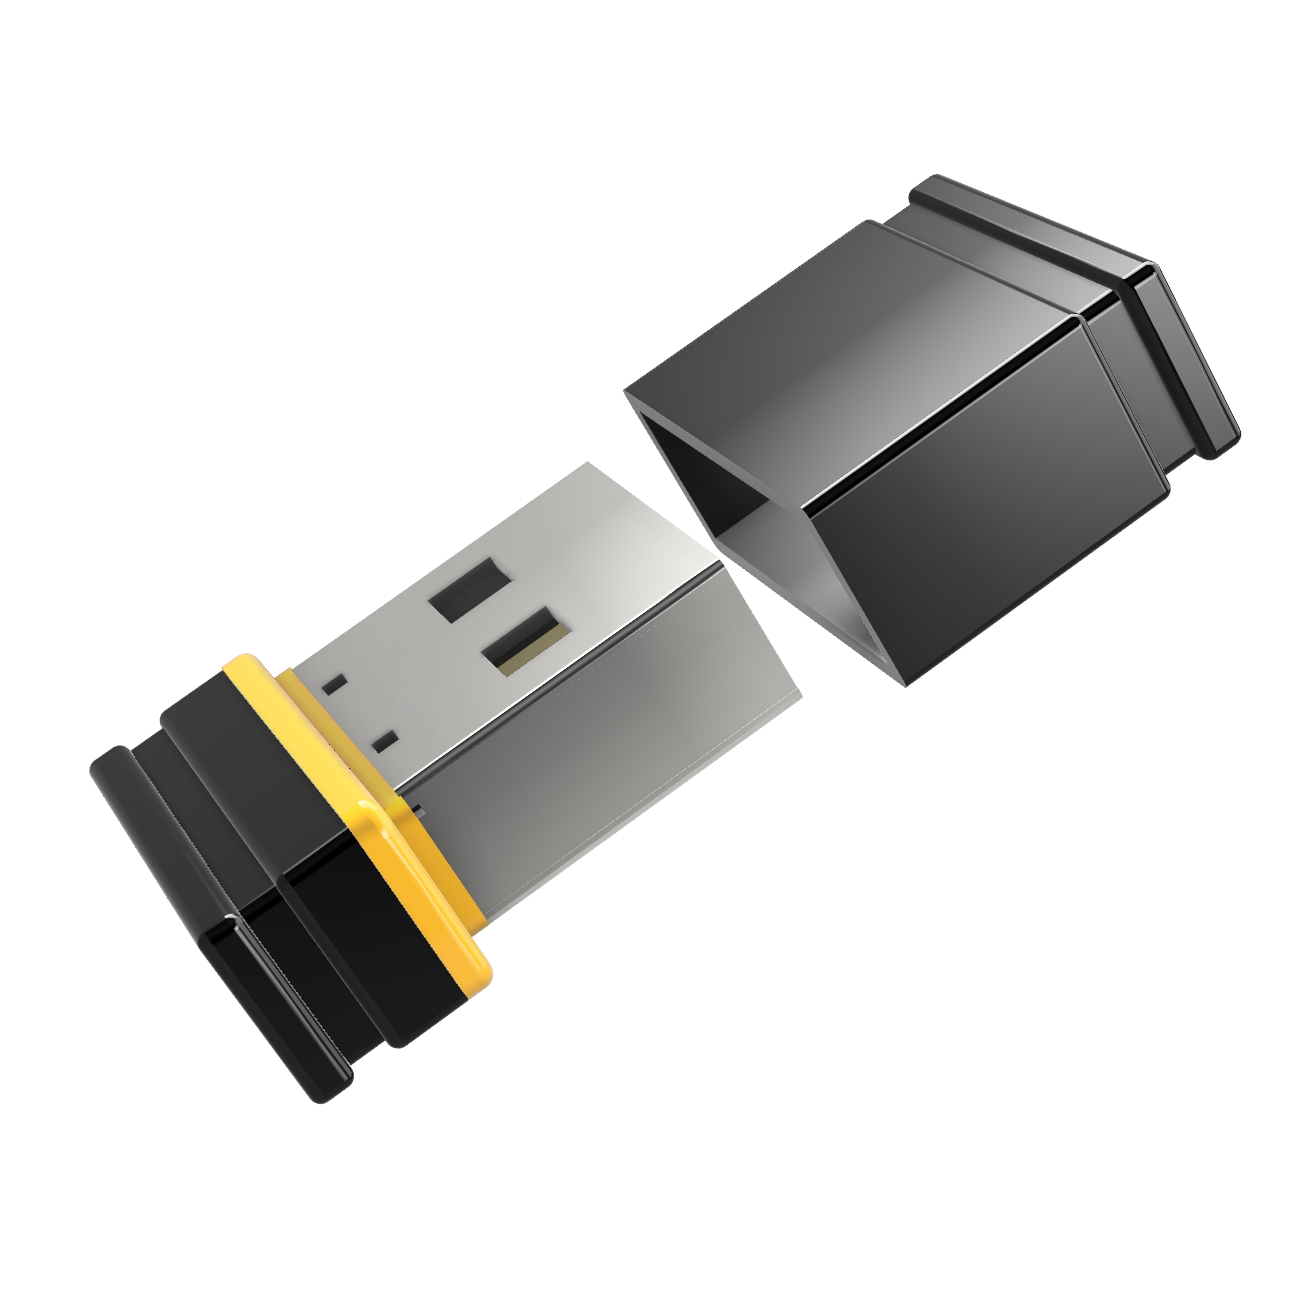 P1 (Schwarz/Gelb, GERMANY ®ULTRA 16 USB USB-Stick GB) Mini